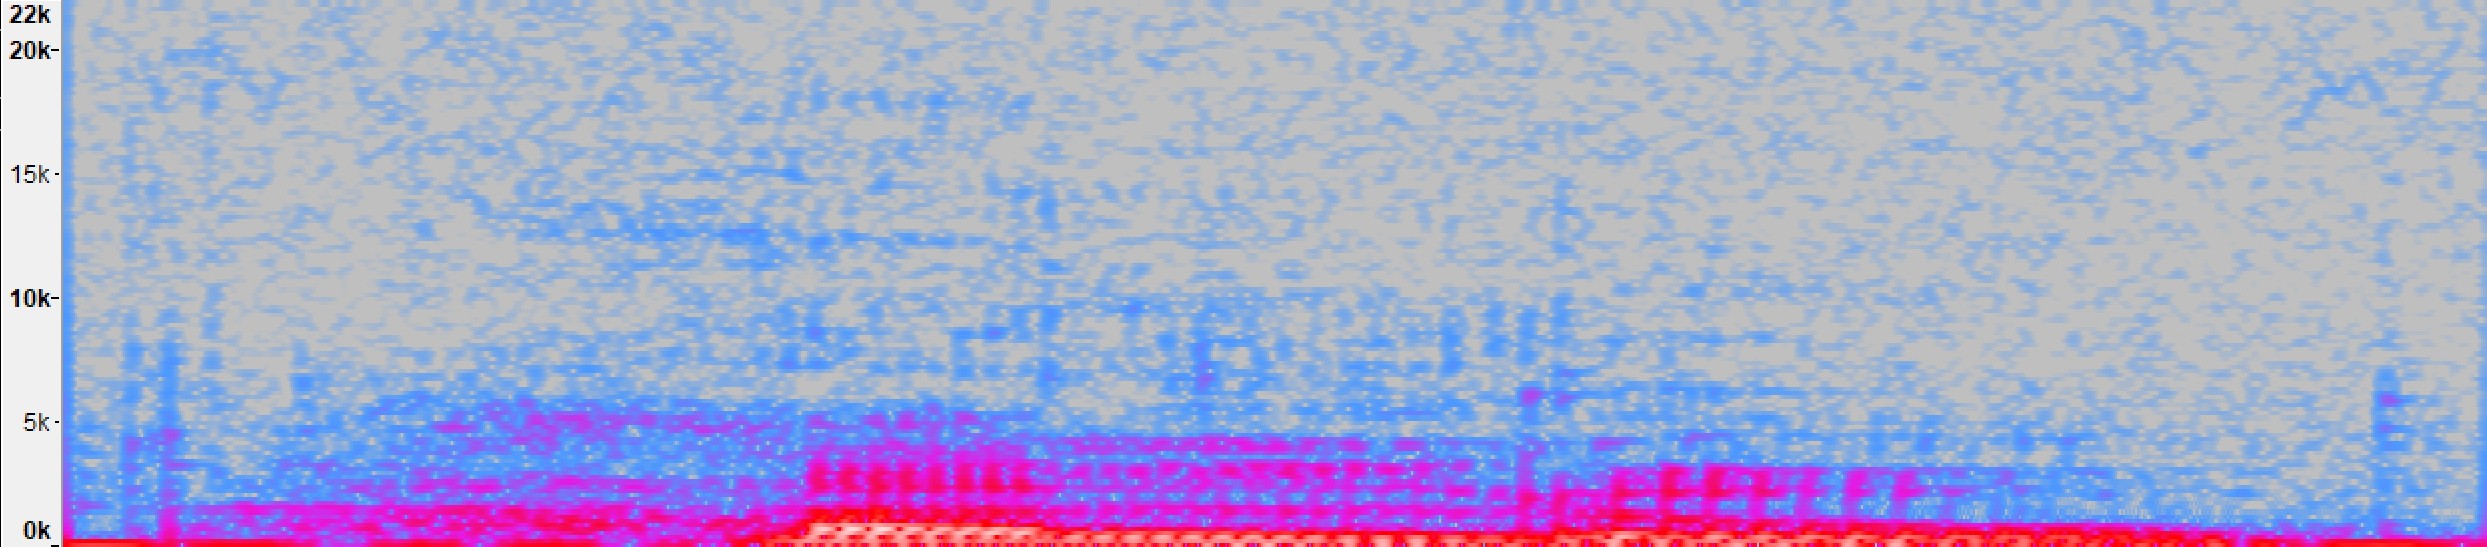 spektrogramm_hallo.jpg